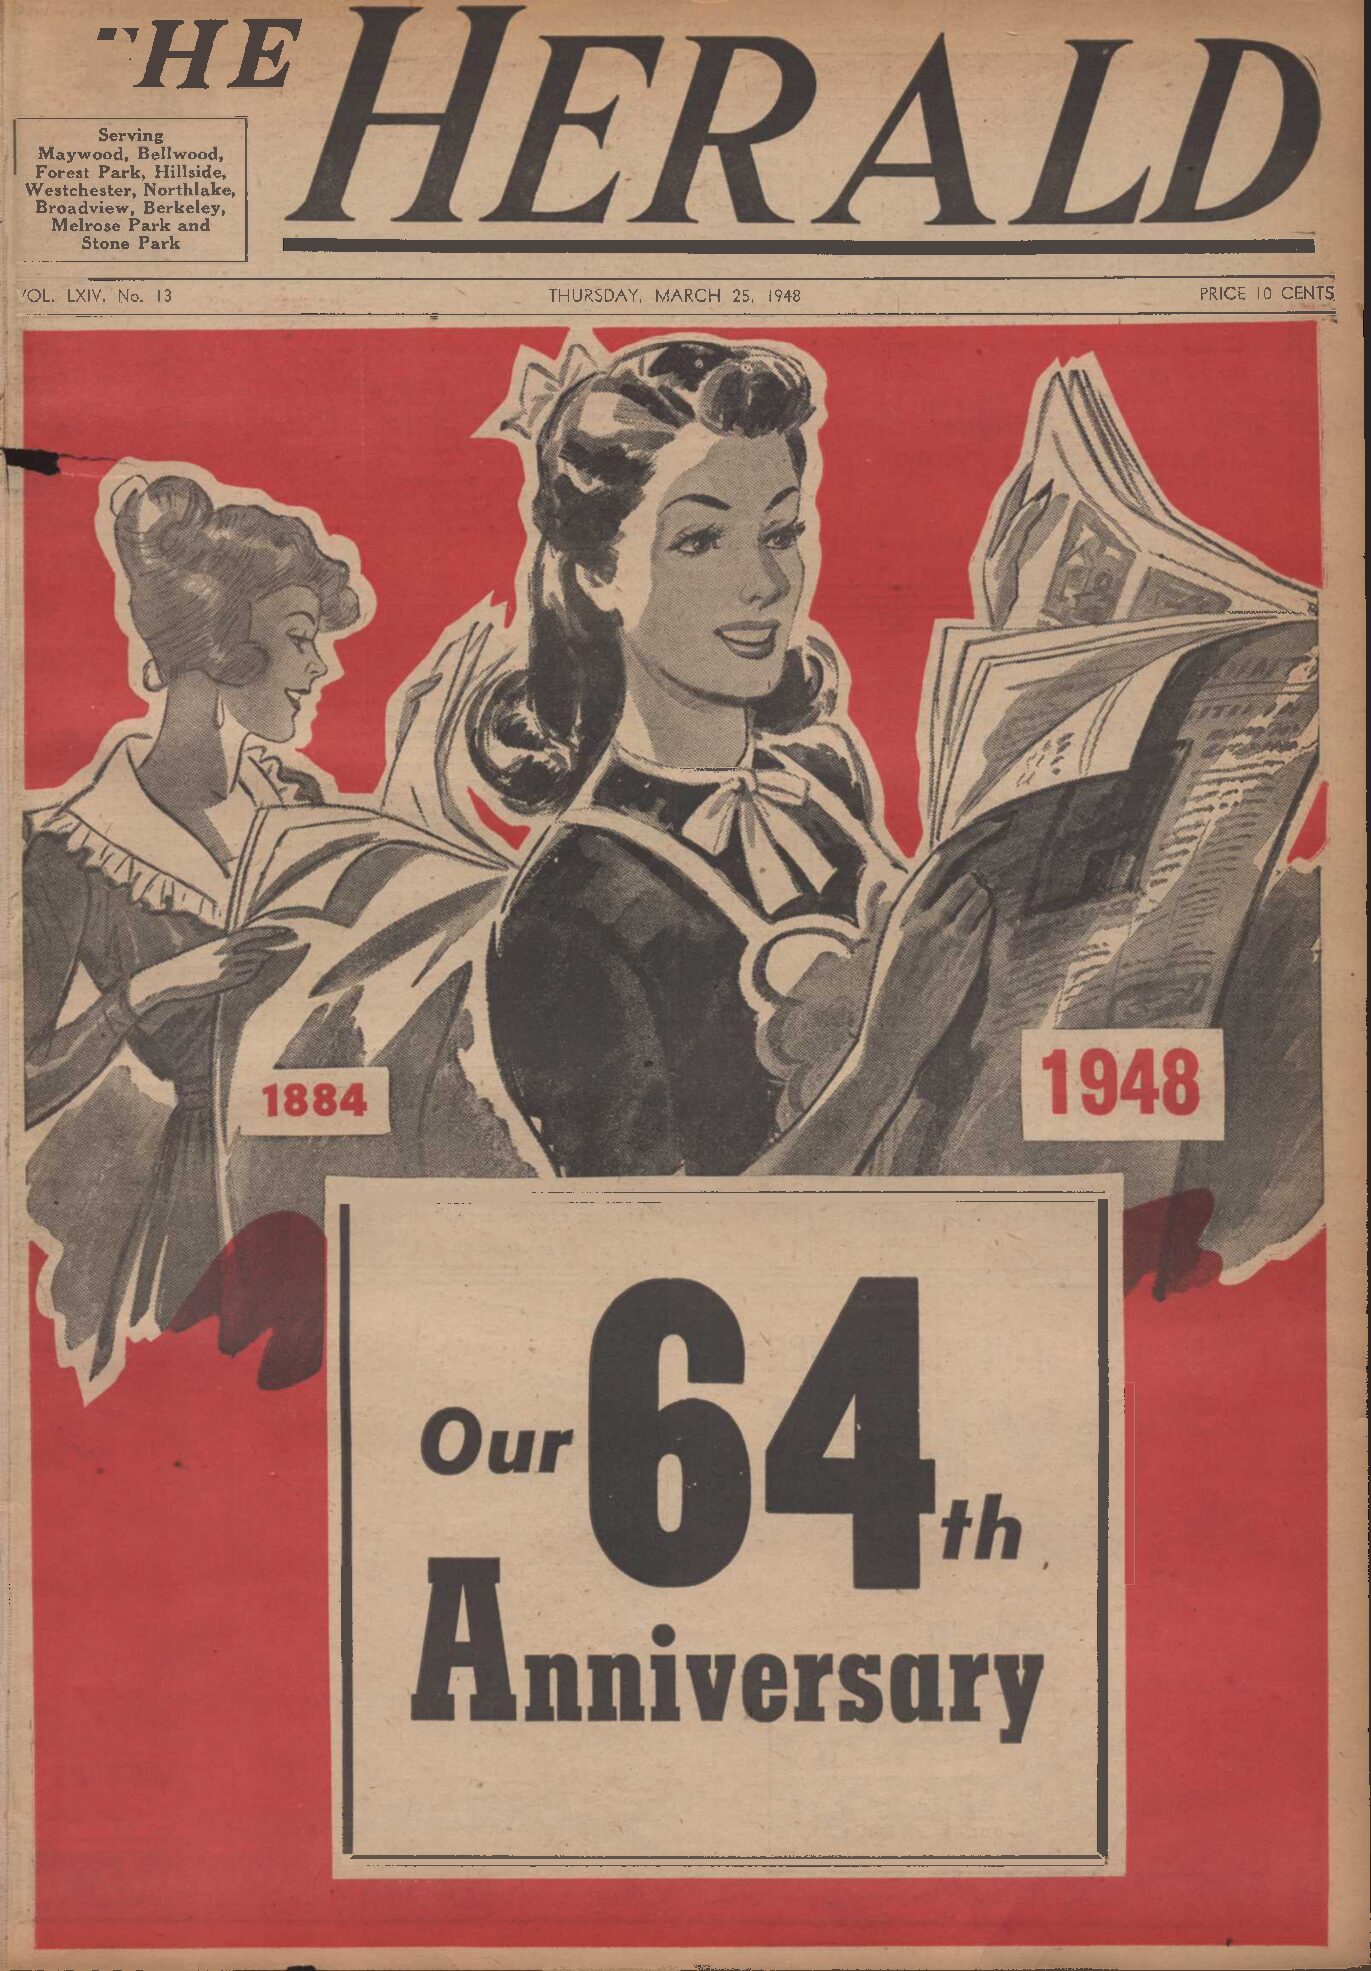 The Herald – 19480325